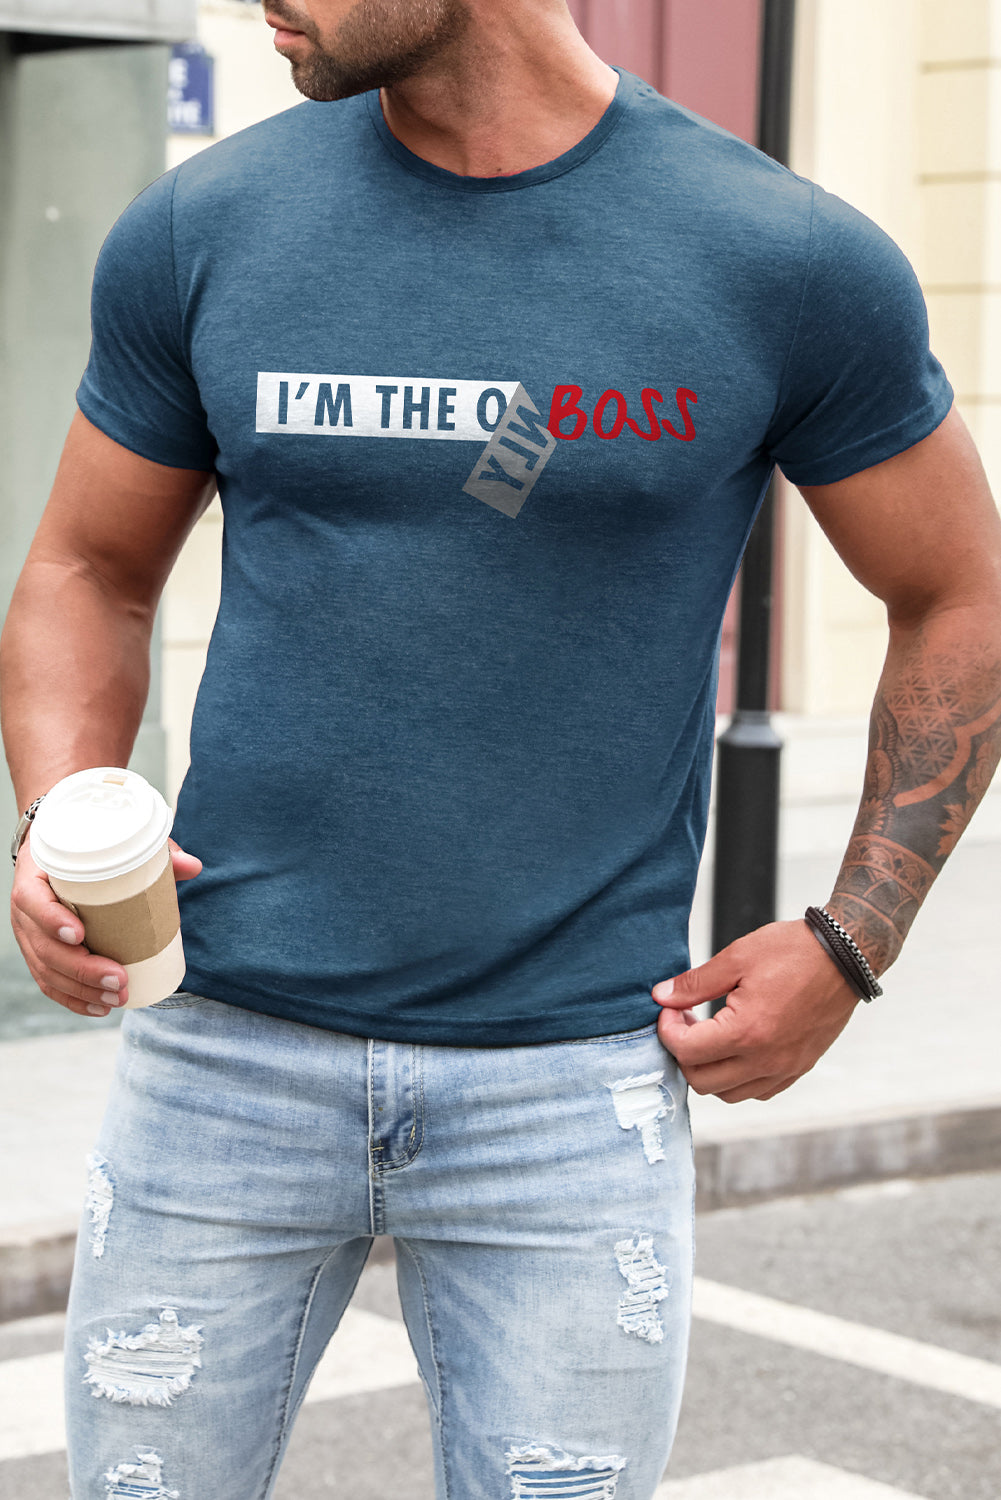 I'M THE ONLY BOSS Print Men T-shirt